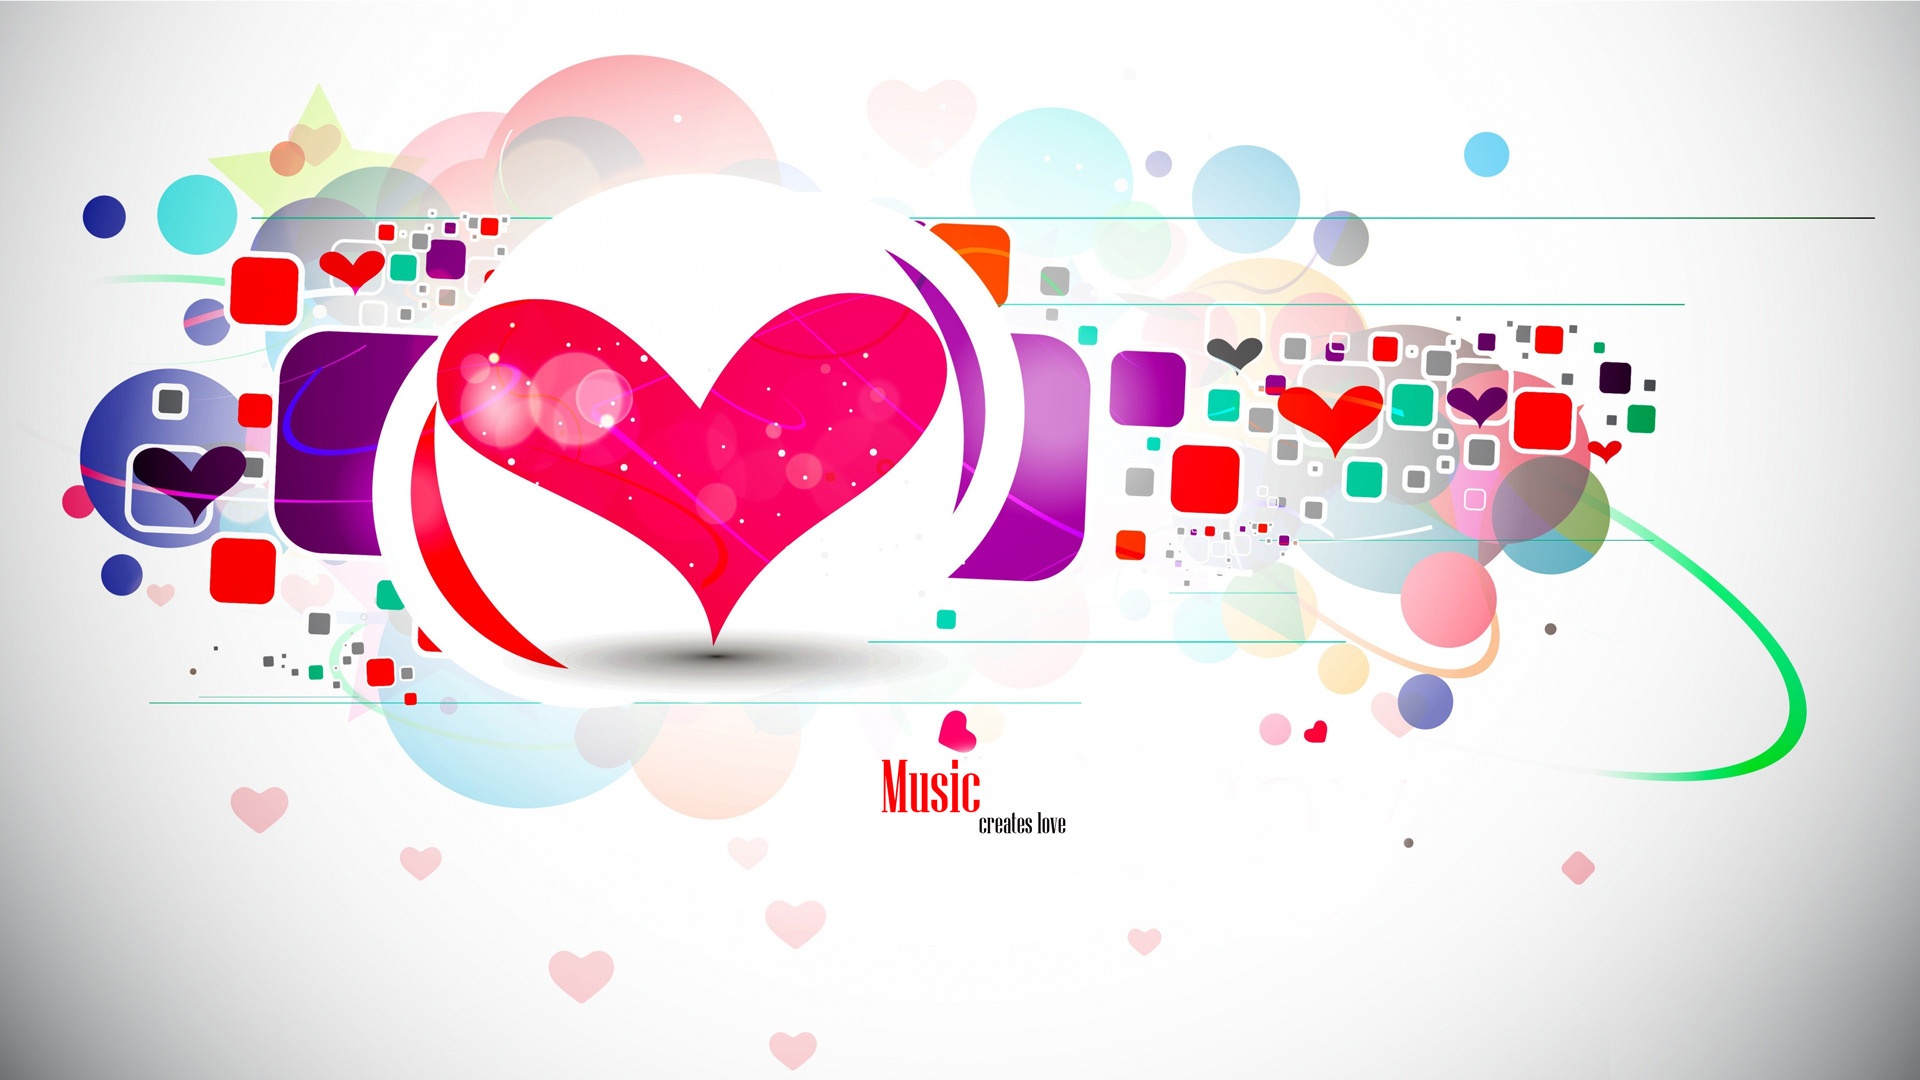 Music Creates Love wallpaper, music and dance wallpaper